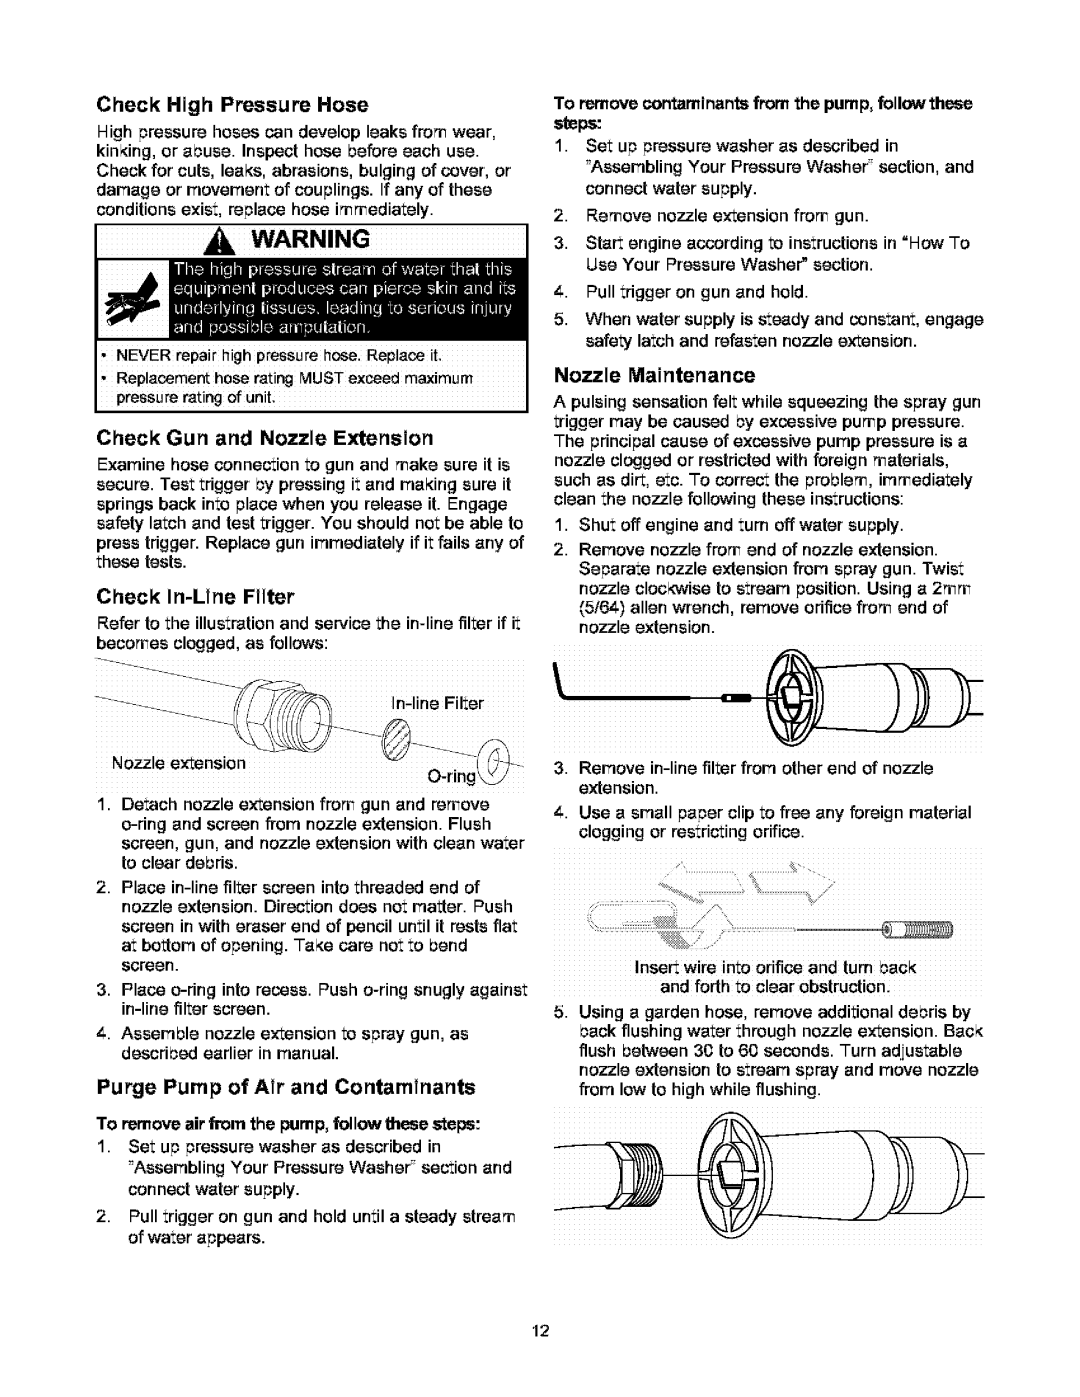 Craftsman 580.752 owner manual Check Gun and Nozzle Extension, Nozzle Maintenance, Purge Pump of Air and Contaminants 